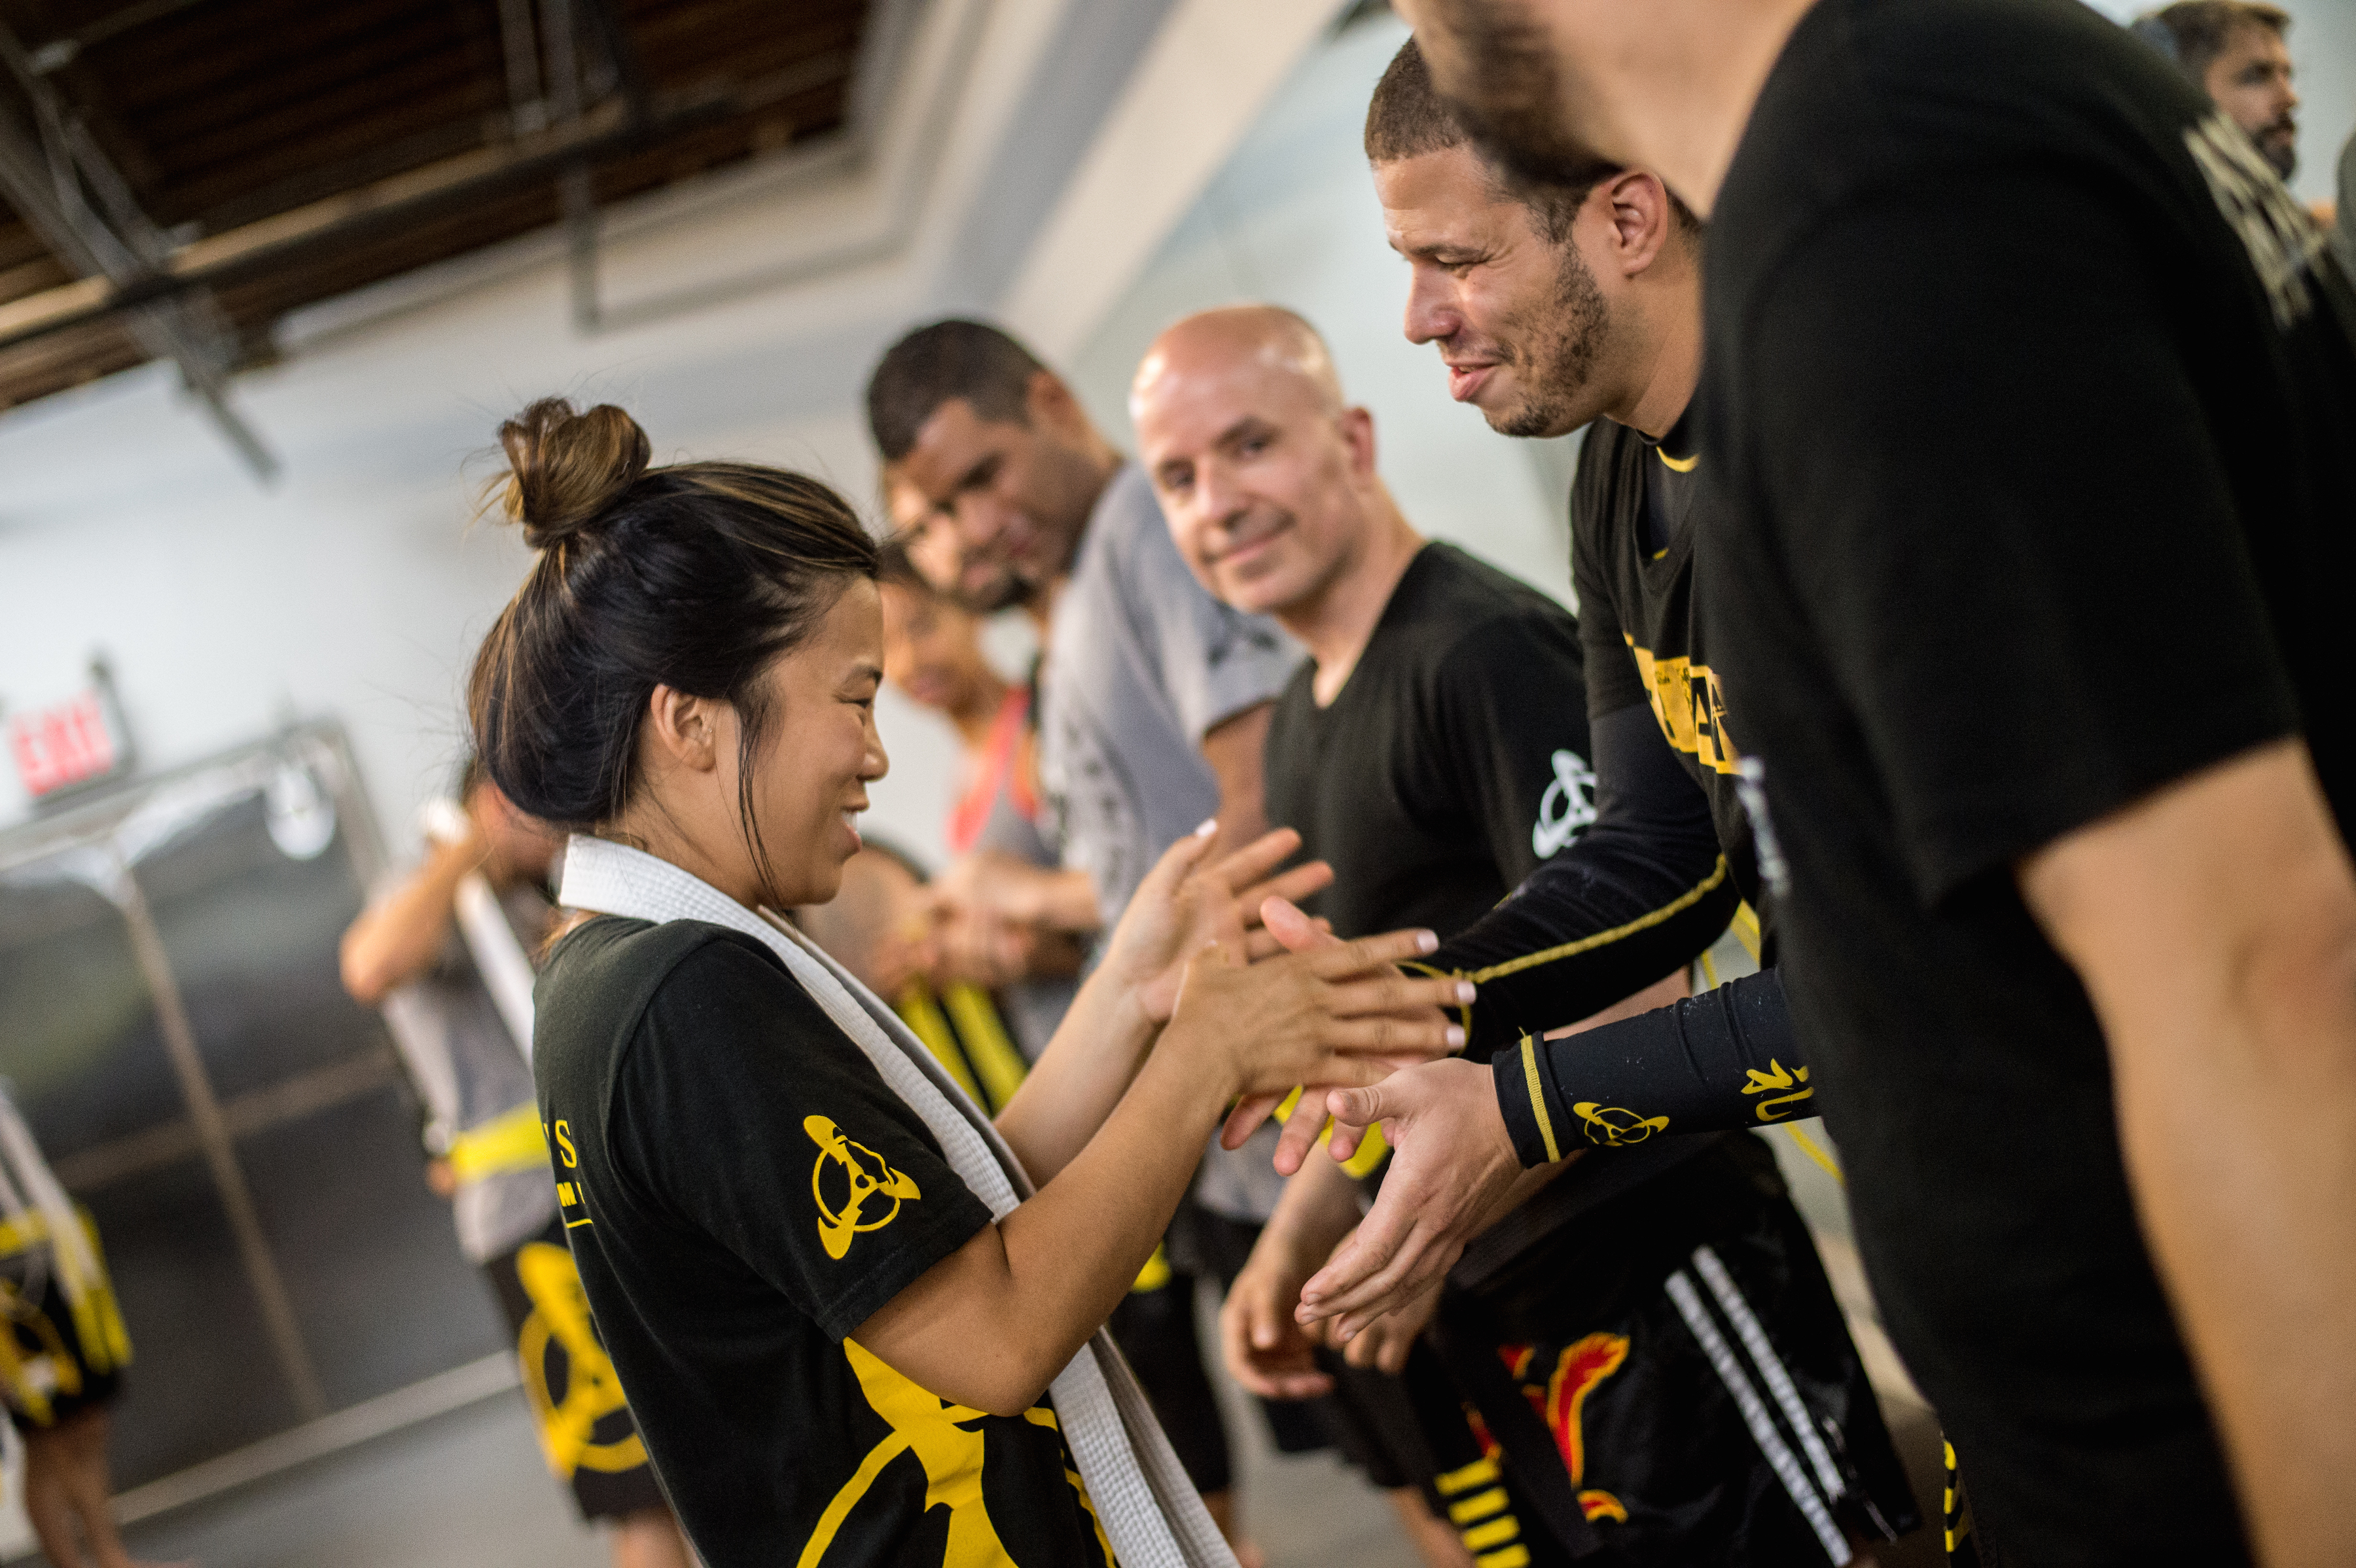 Congratulatory handshake after martial arts competition